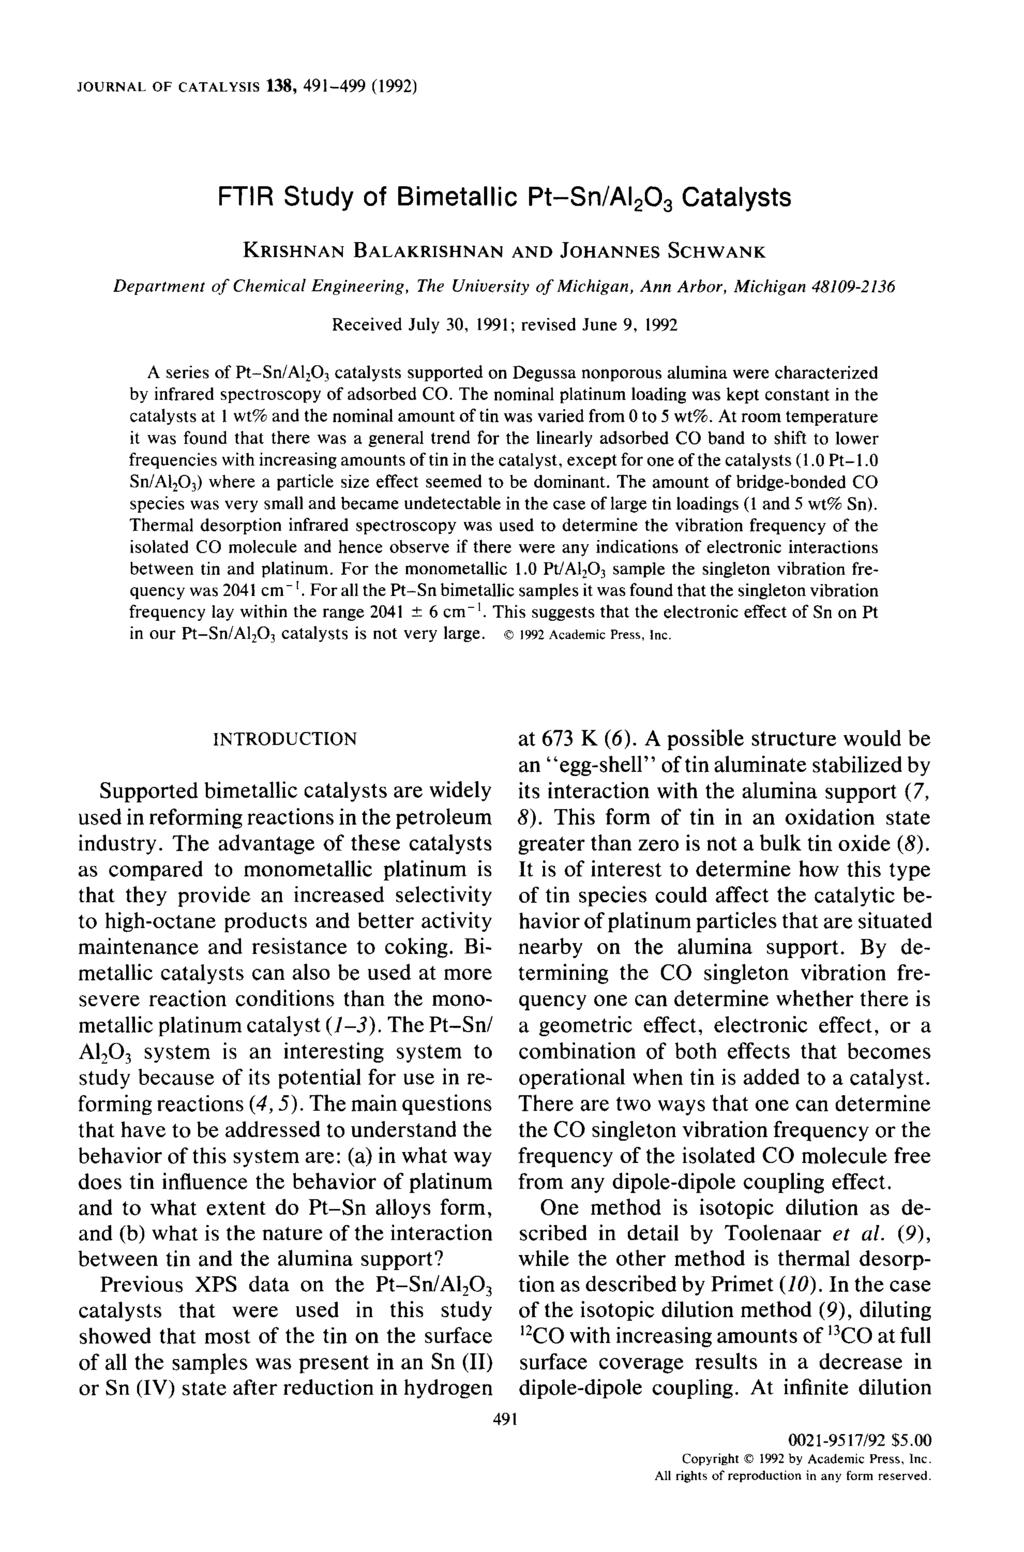 JOURNAL OF CATALYSIS 138, 491--499 (1992) FTIR Study of Bimetallic Pt-Sn/AI203 Catalysts KRISHNAN BALAKRISHNAN AND JOHANNES SCHWANK Department of Chemical Engineering, The University of Michigan, Ann